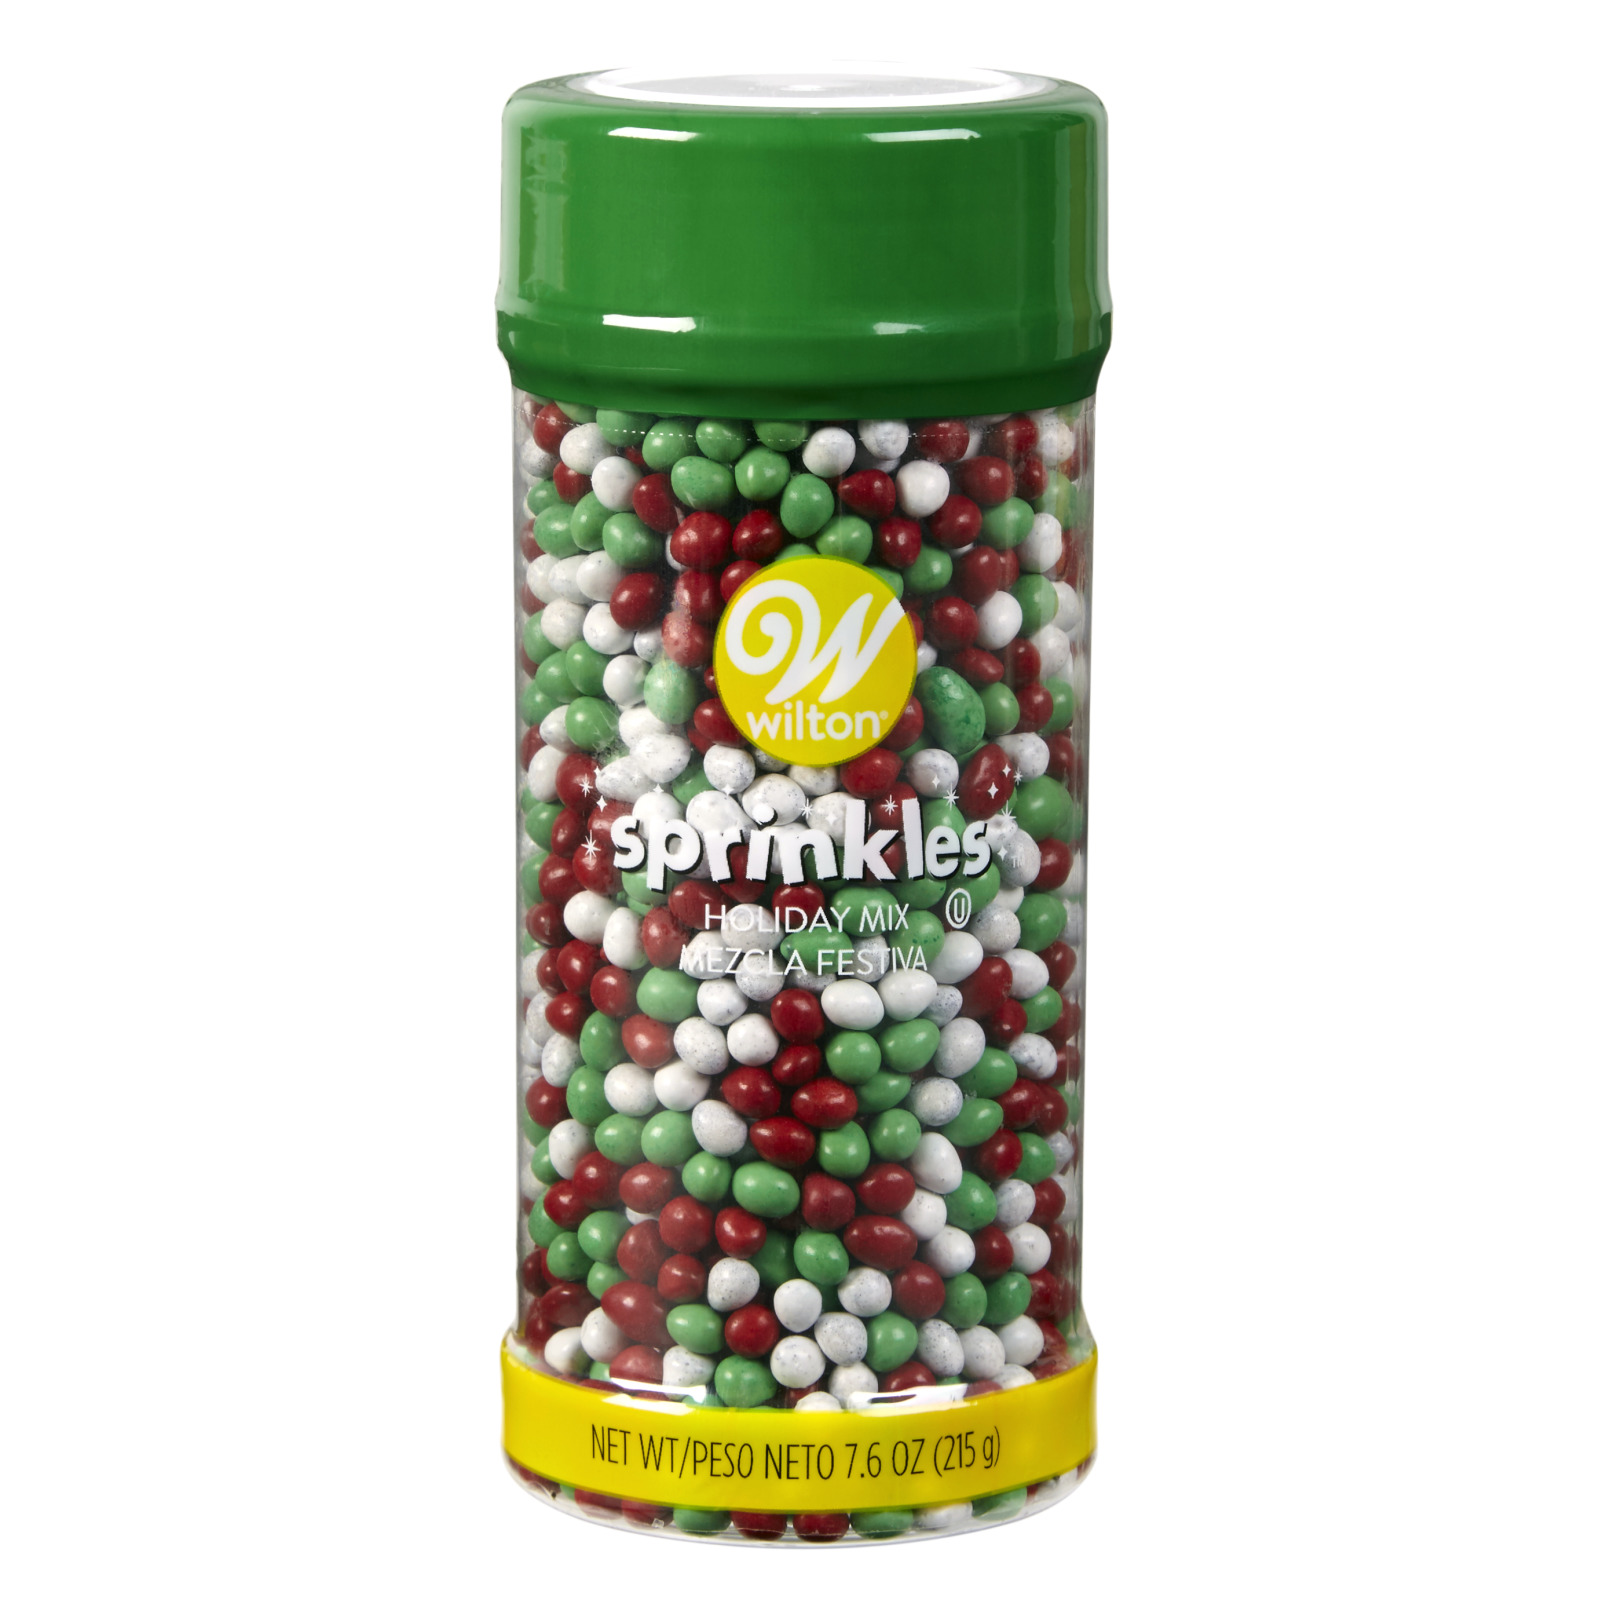 Holiday Mix Sprinkles, Item # 710-7649